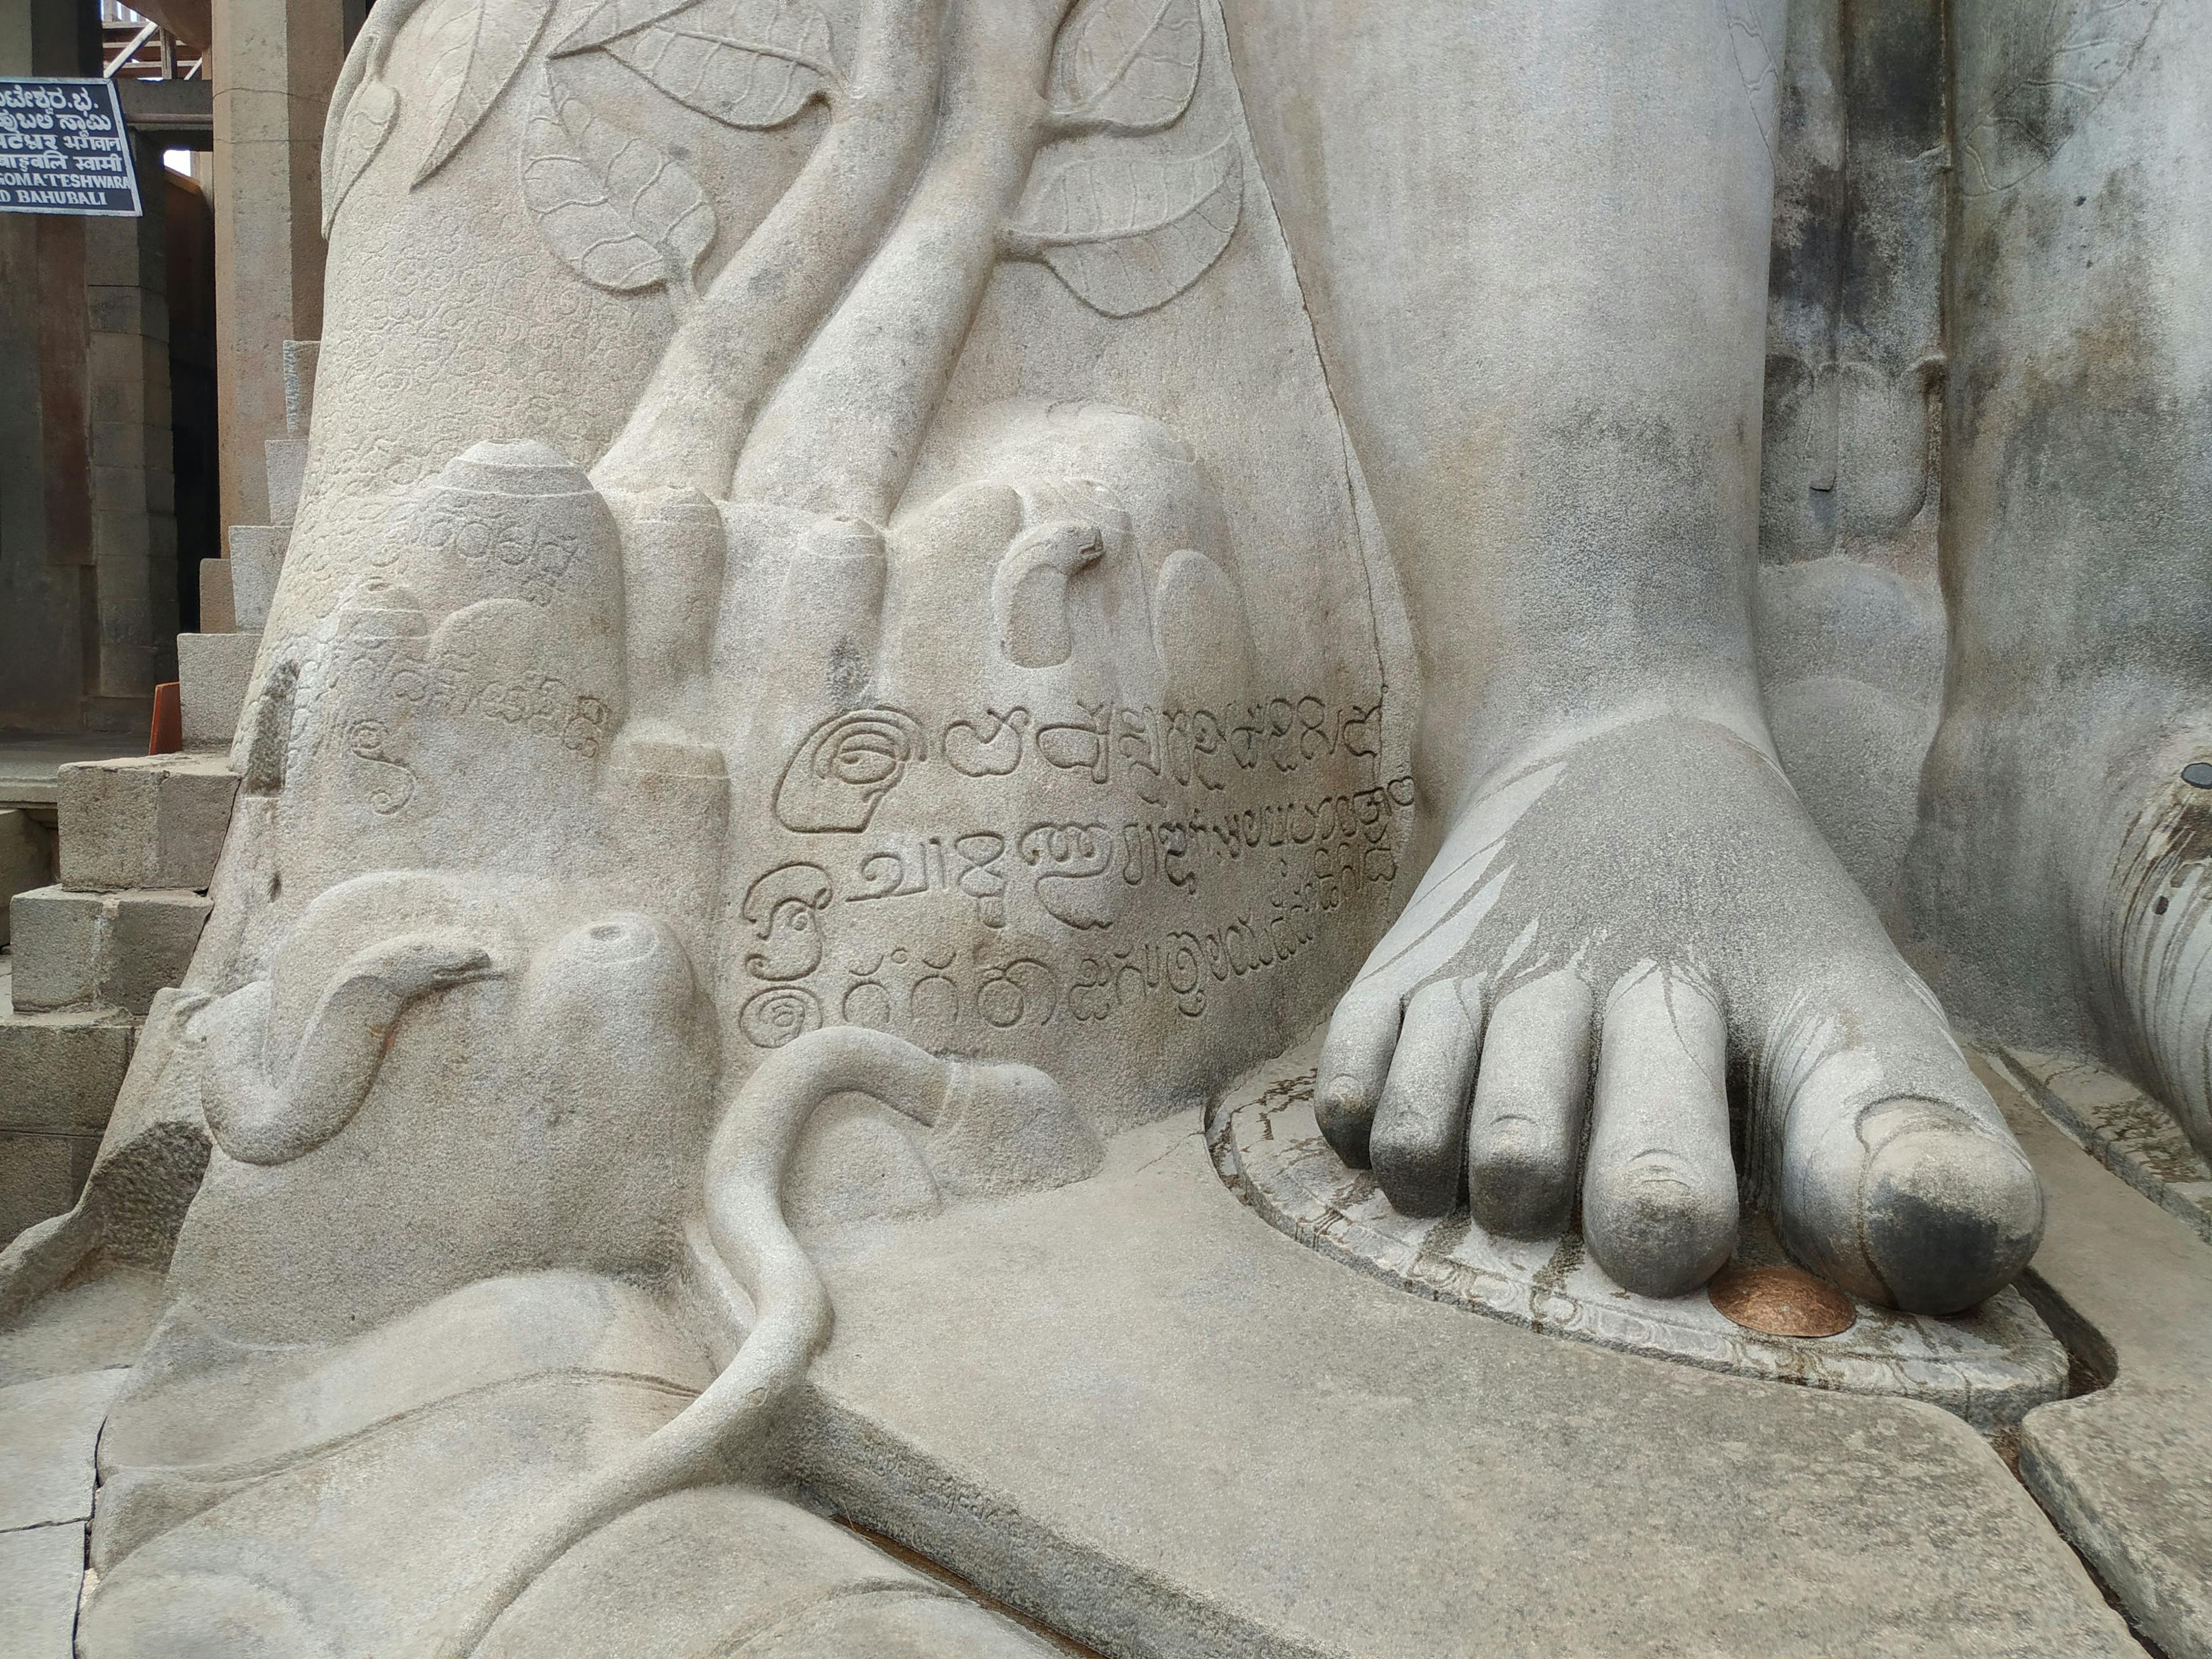 The vegetation around Bahubali’s feet